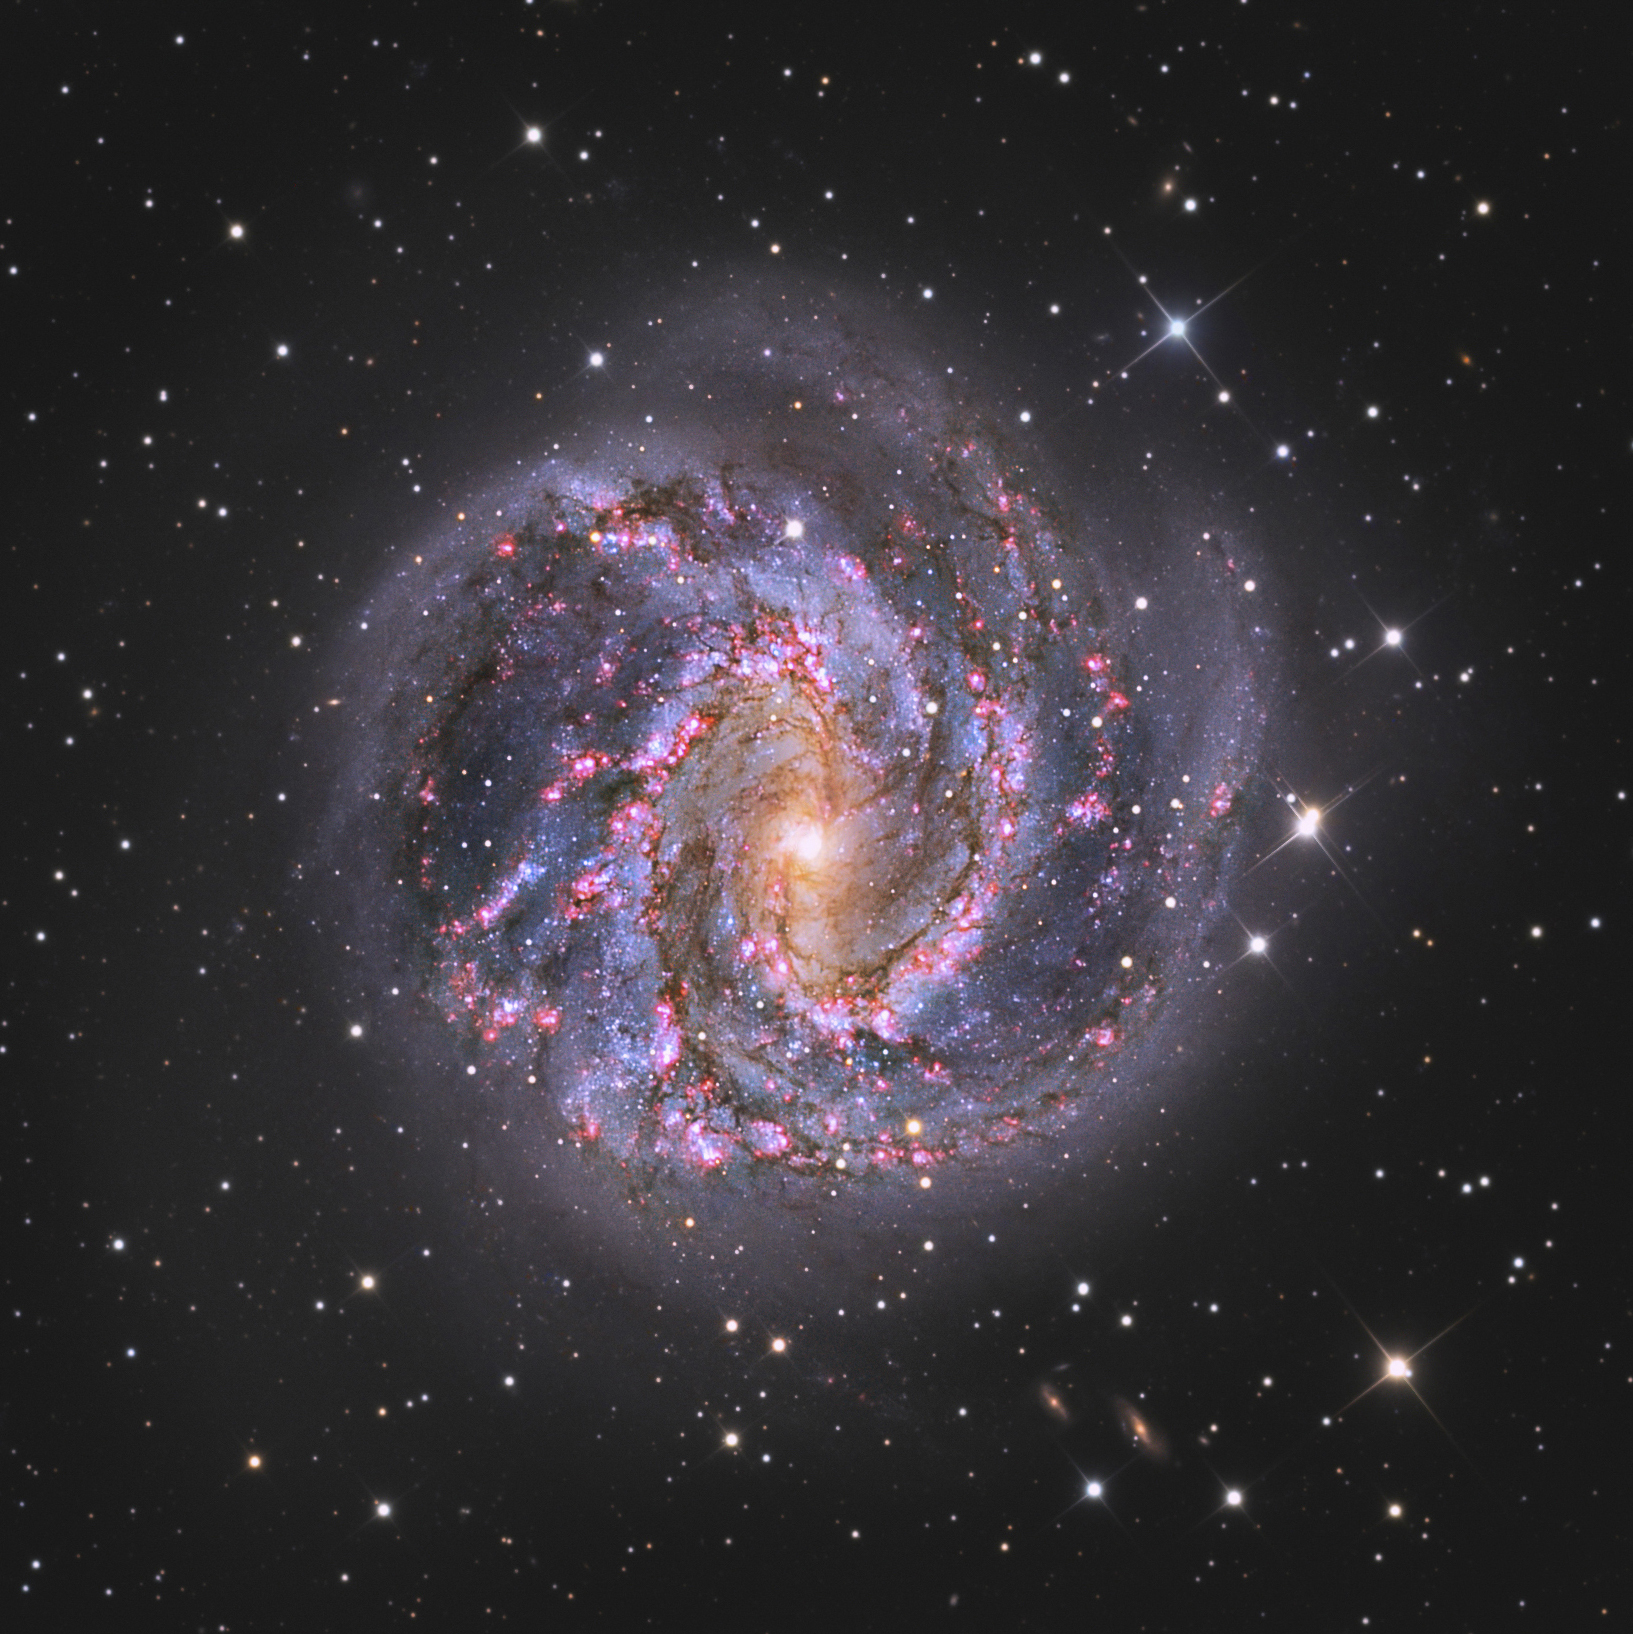 Southern Pinwheel Galaxy - Messier 83